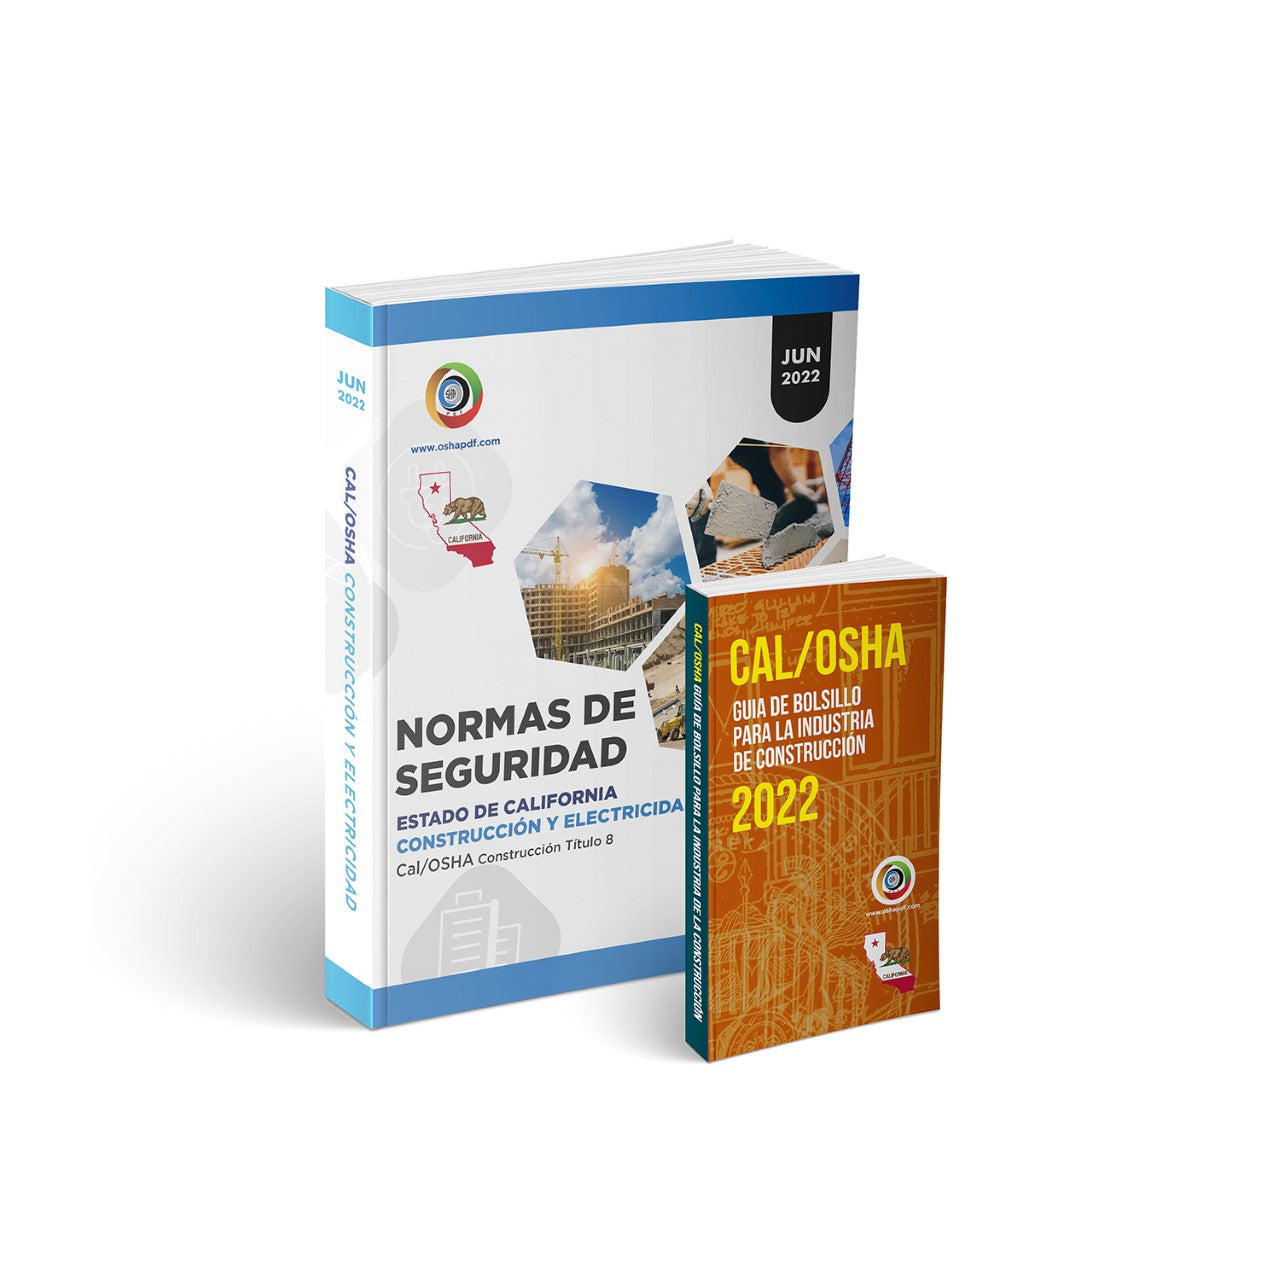 Cal/OSHA Construction Industry June 2022 Book - Spanish